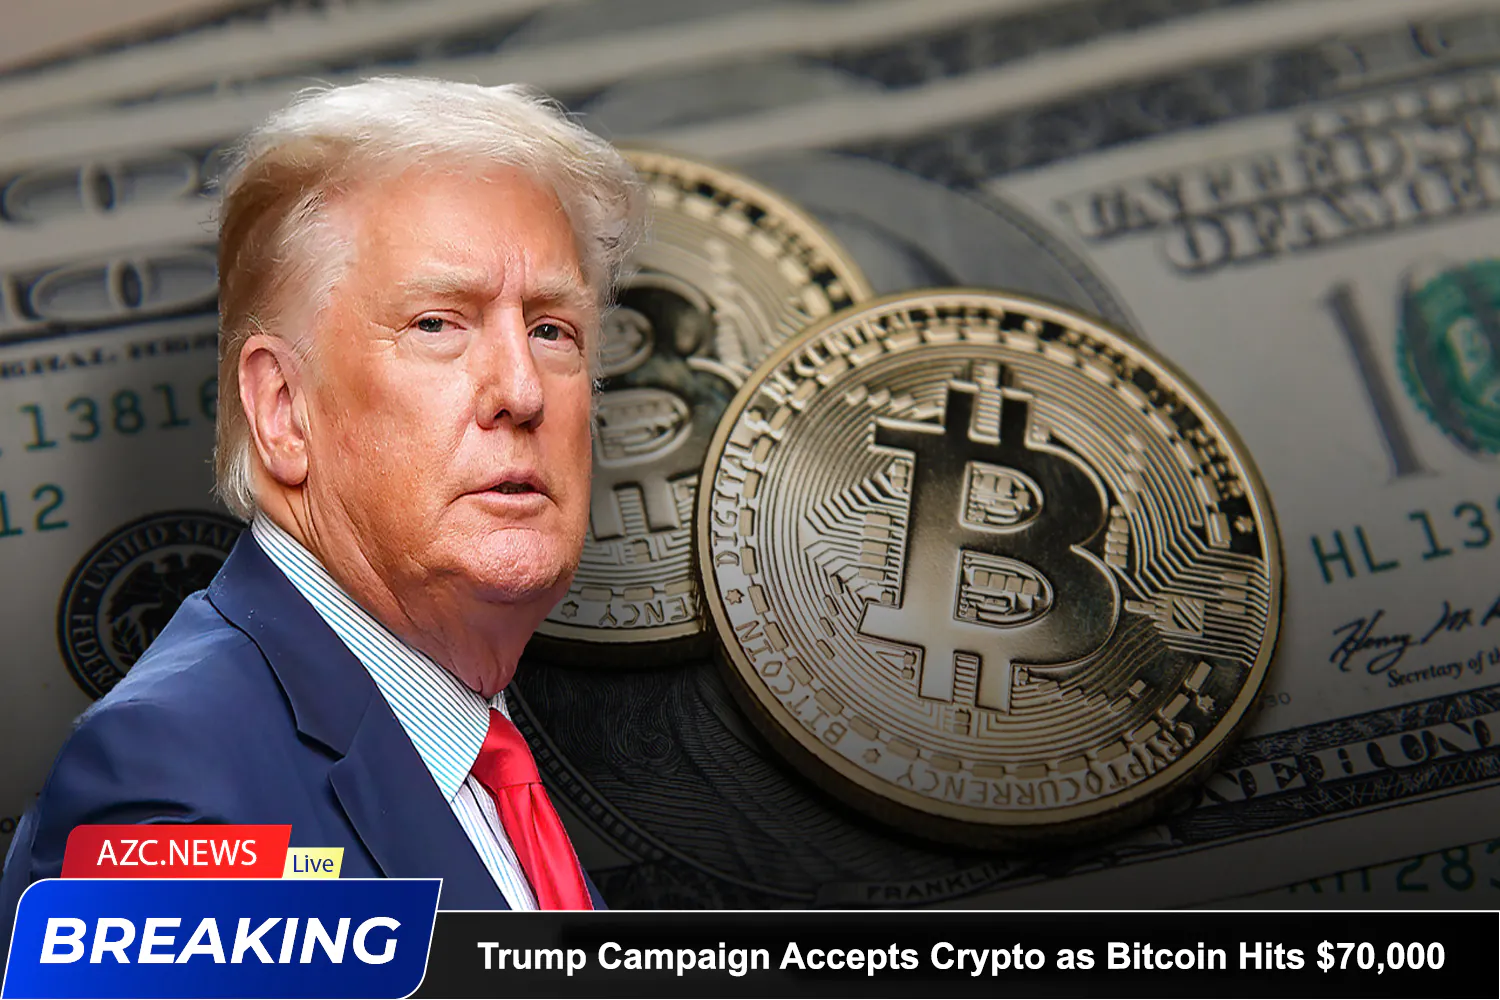 Azcnews Trump Campaign Accepts Crypto As Bitcoin Hits $70,000